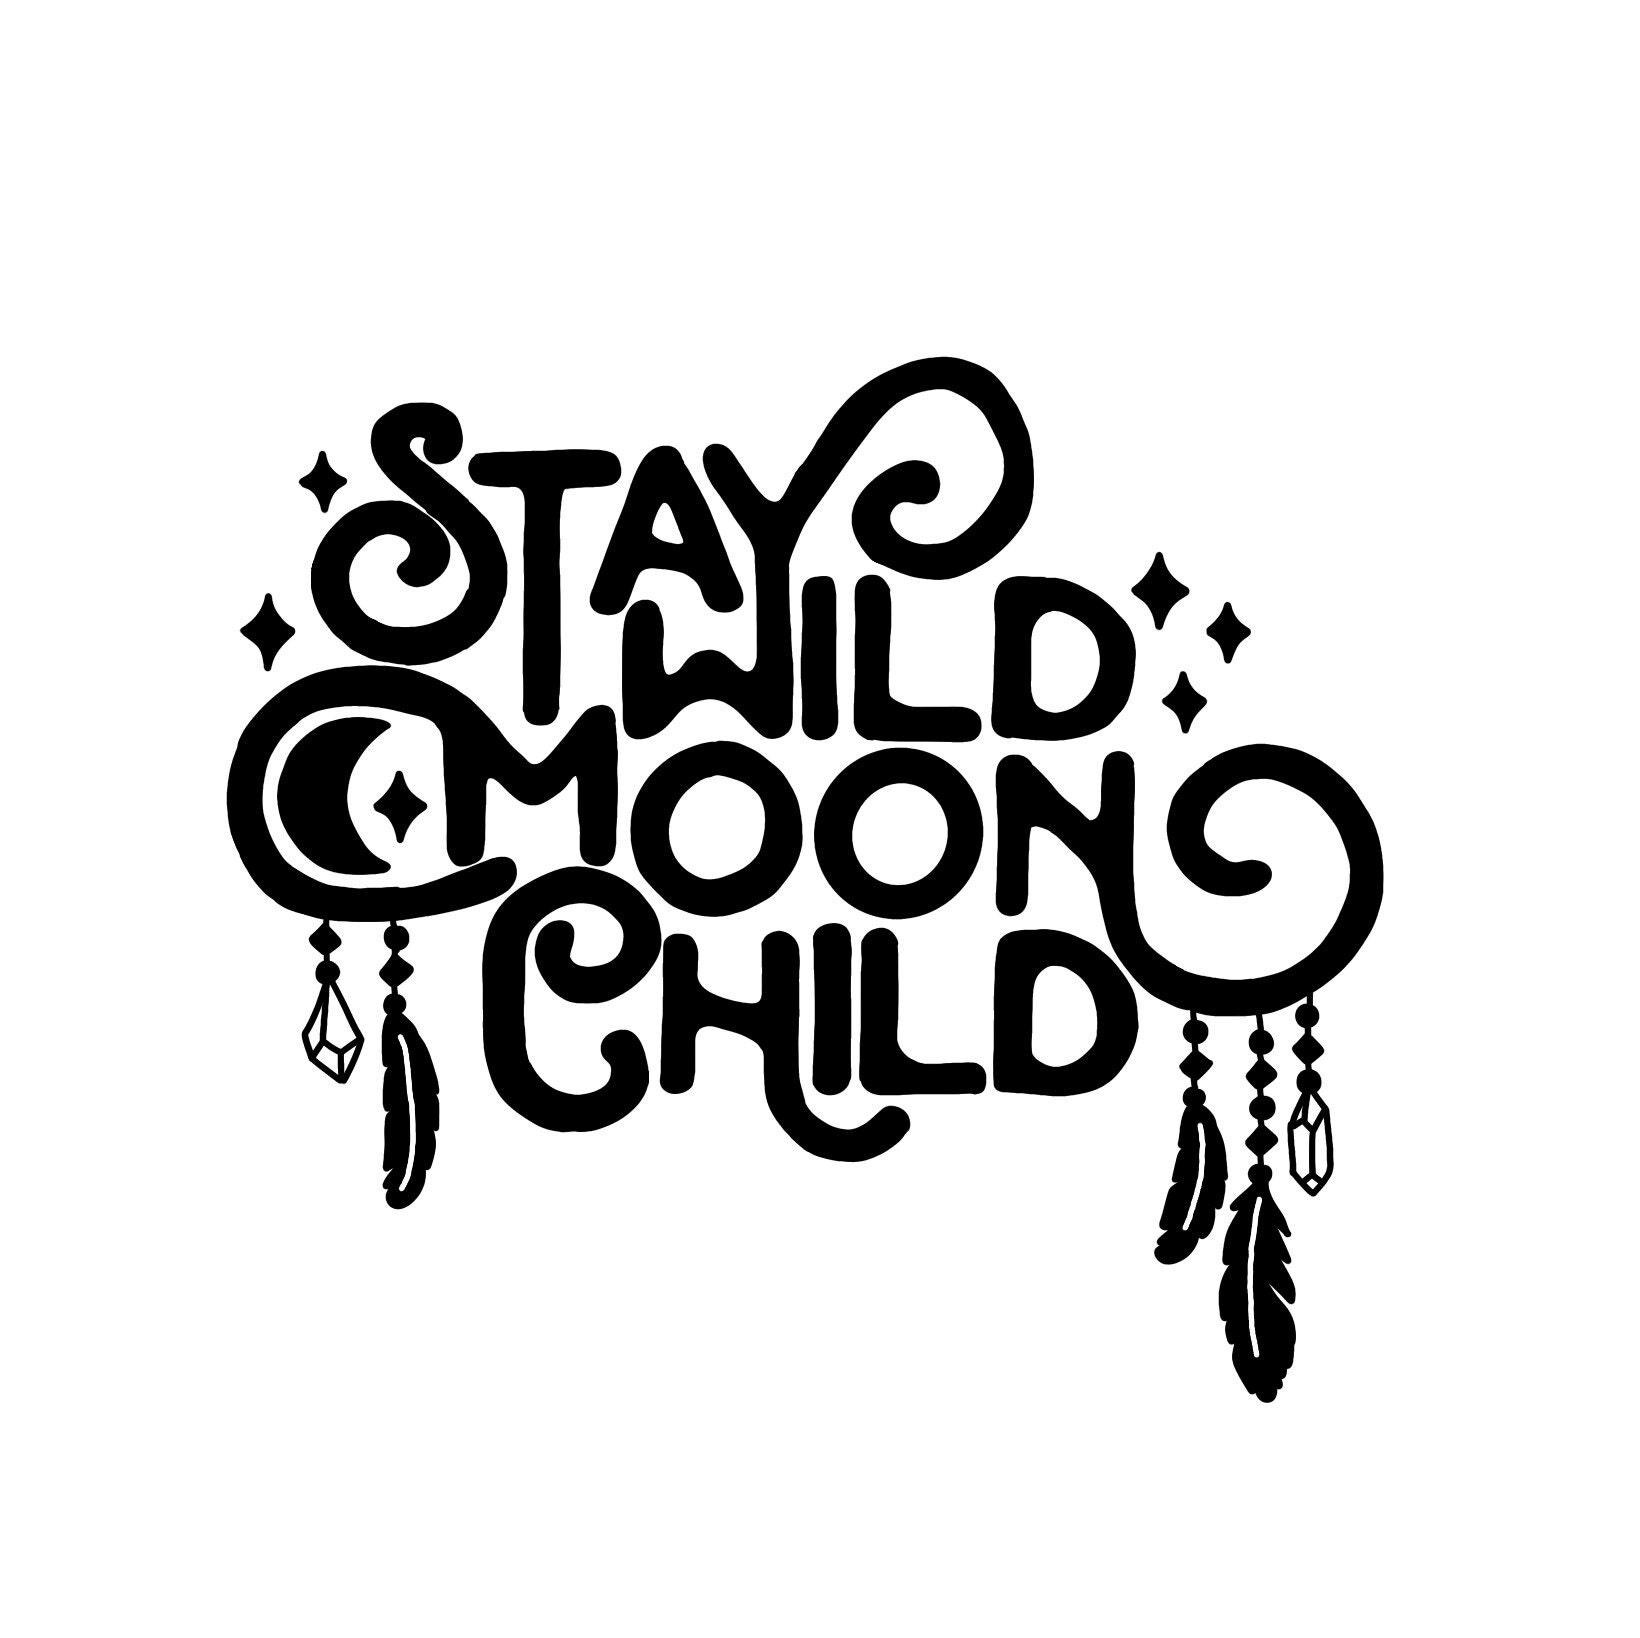 Stay Wild Moon Child SVG/ Decal/ Sticker - Etsy